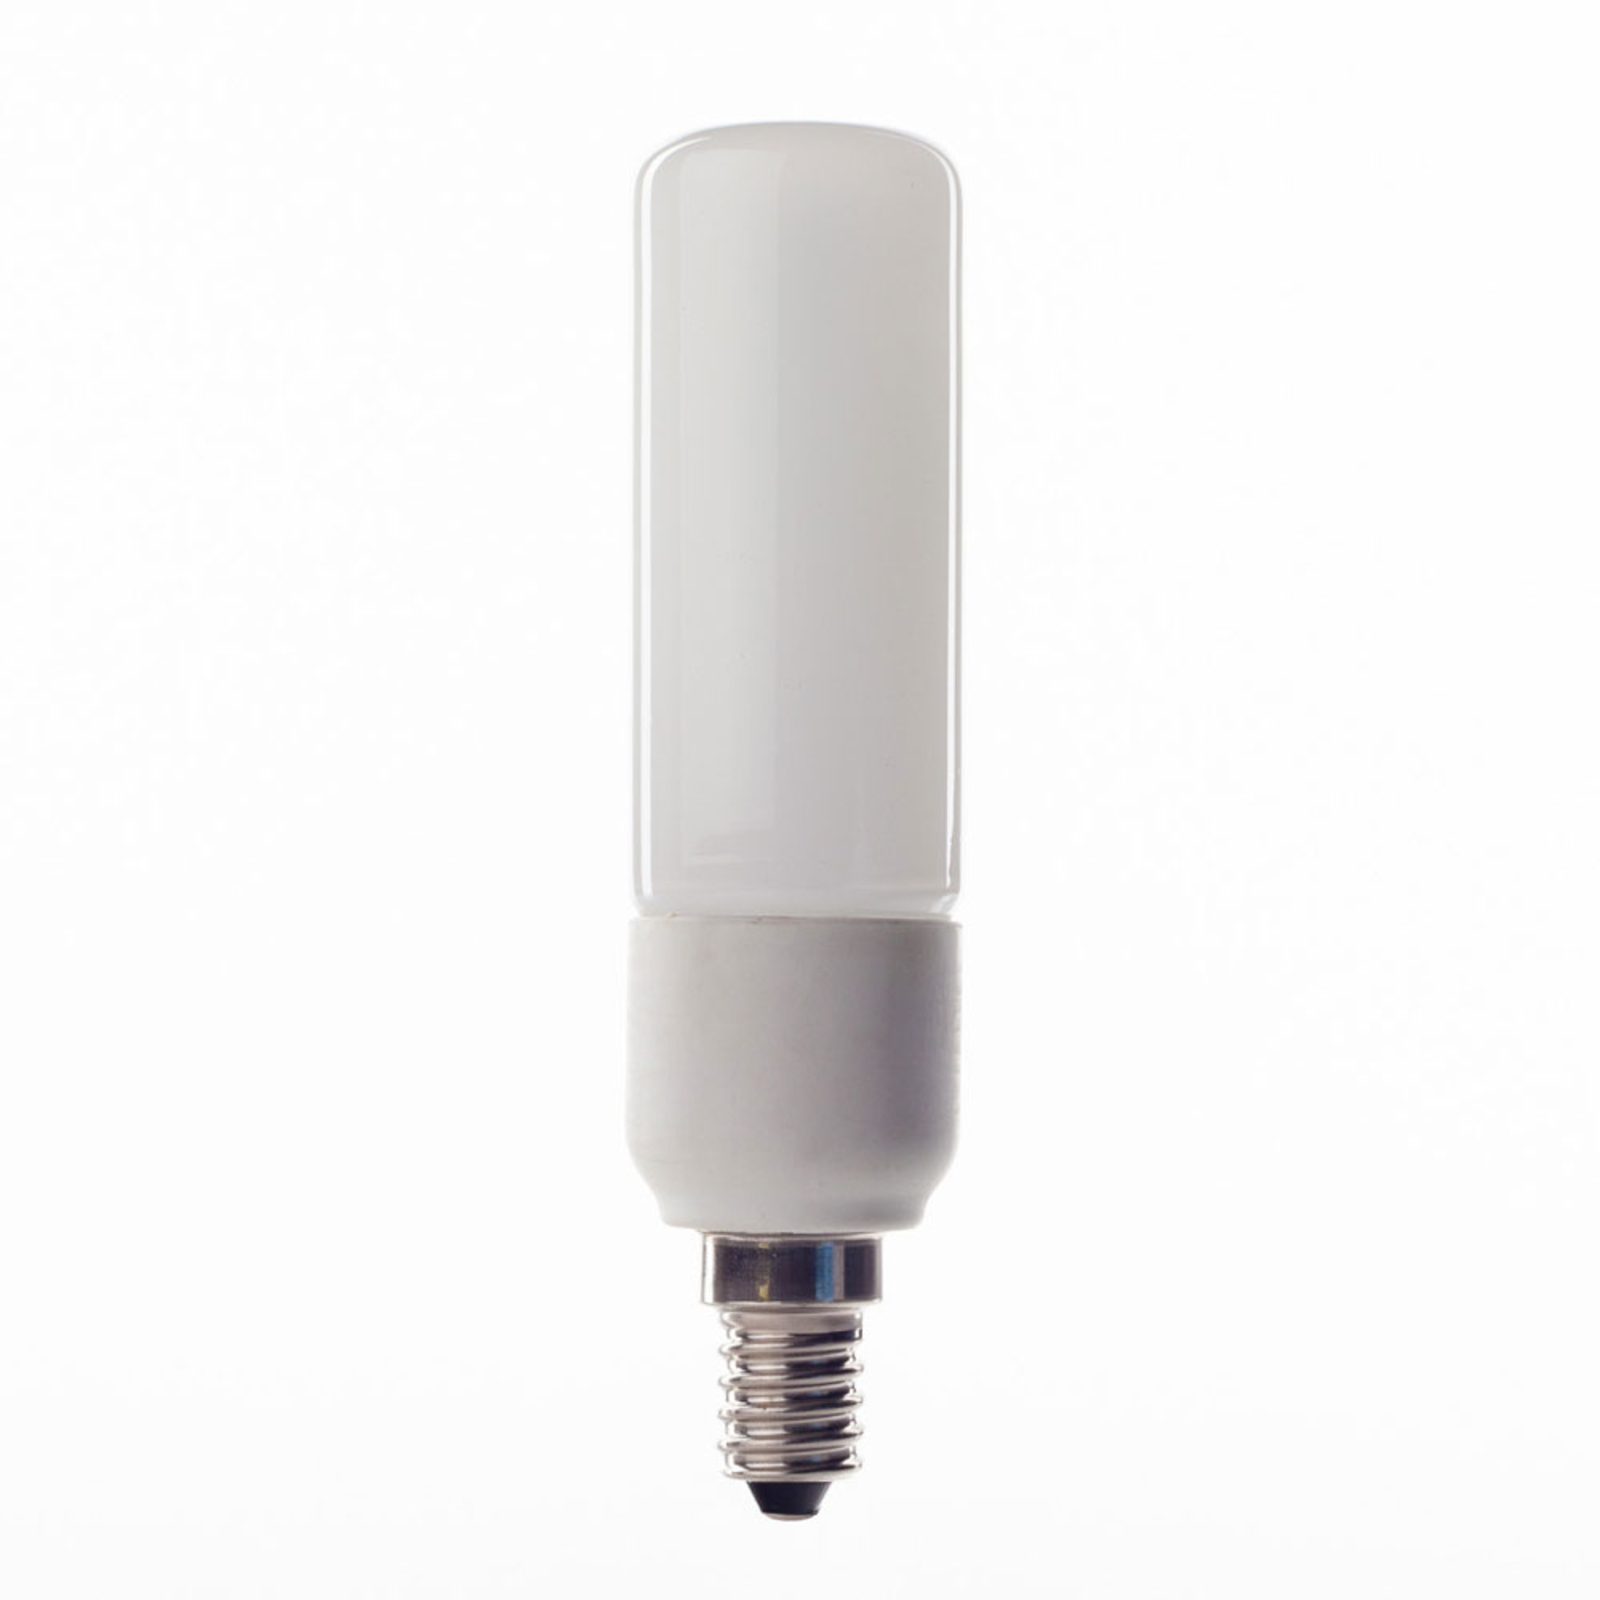 E14 5W LED lamp torukujulises vormis